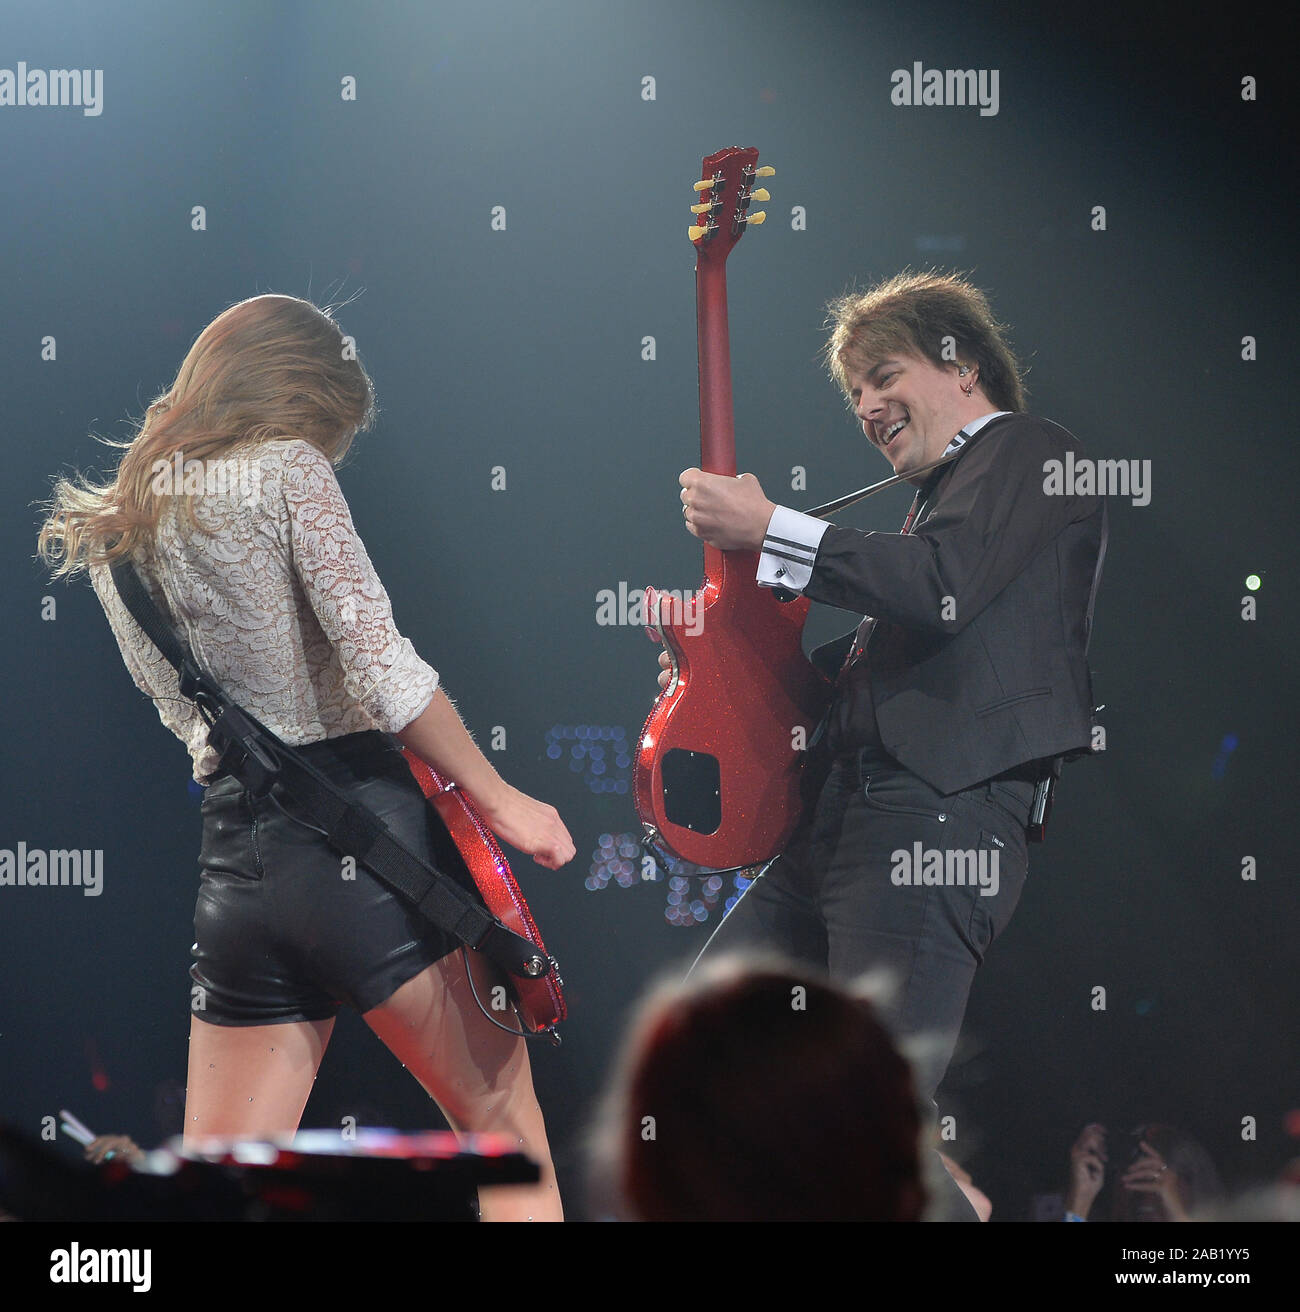 ATLANTA, GA - 18. April: Seven-Time Grammy Gewinner Taylor Swift (* 13. Dezember 1989) führt die rote Tour an der Philips Arena am 18. April 2013 in Atlanta, Georgia: Taylor Swift Stockfoto